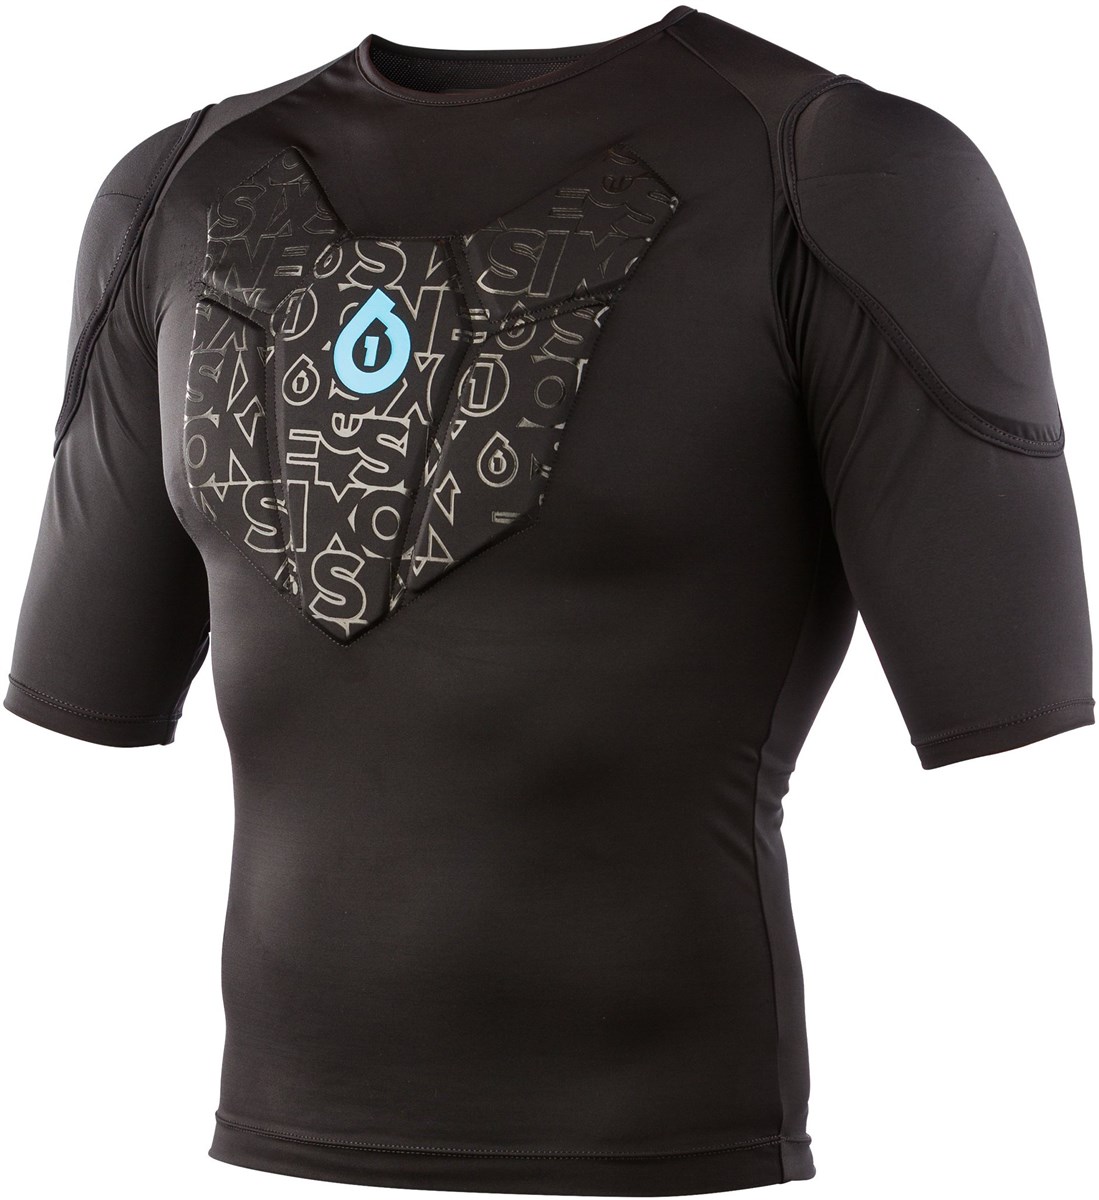 SixSixOne 661 Sub Gear Short Sleeve Shirt - Body Armour product image